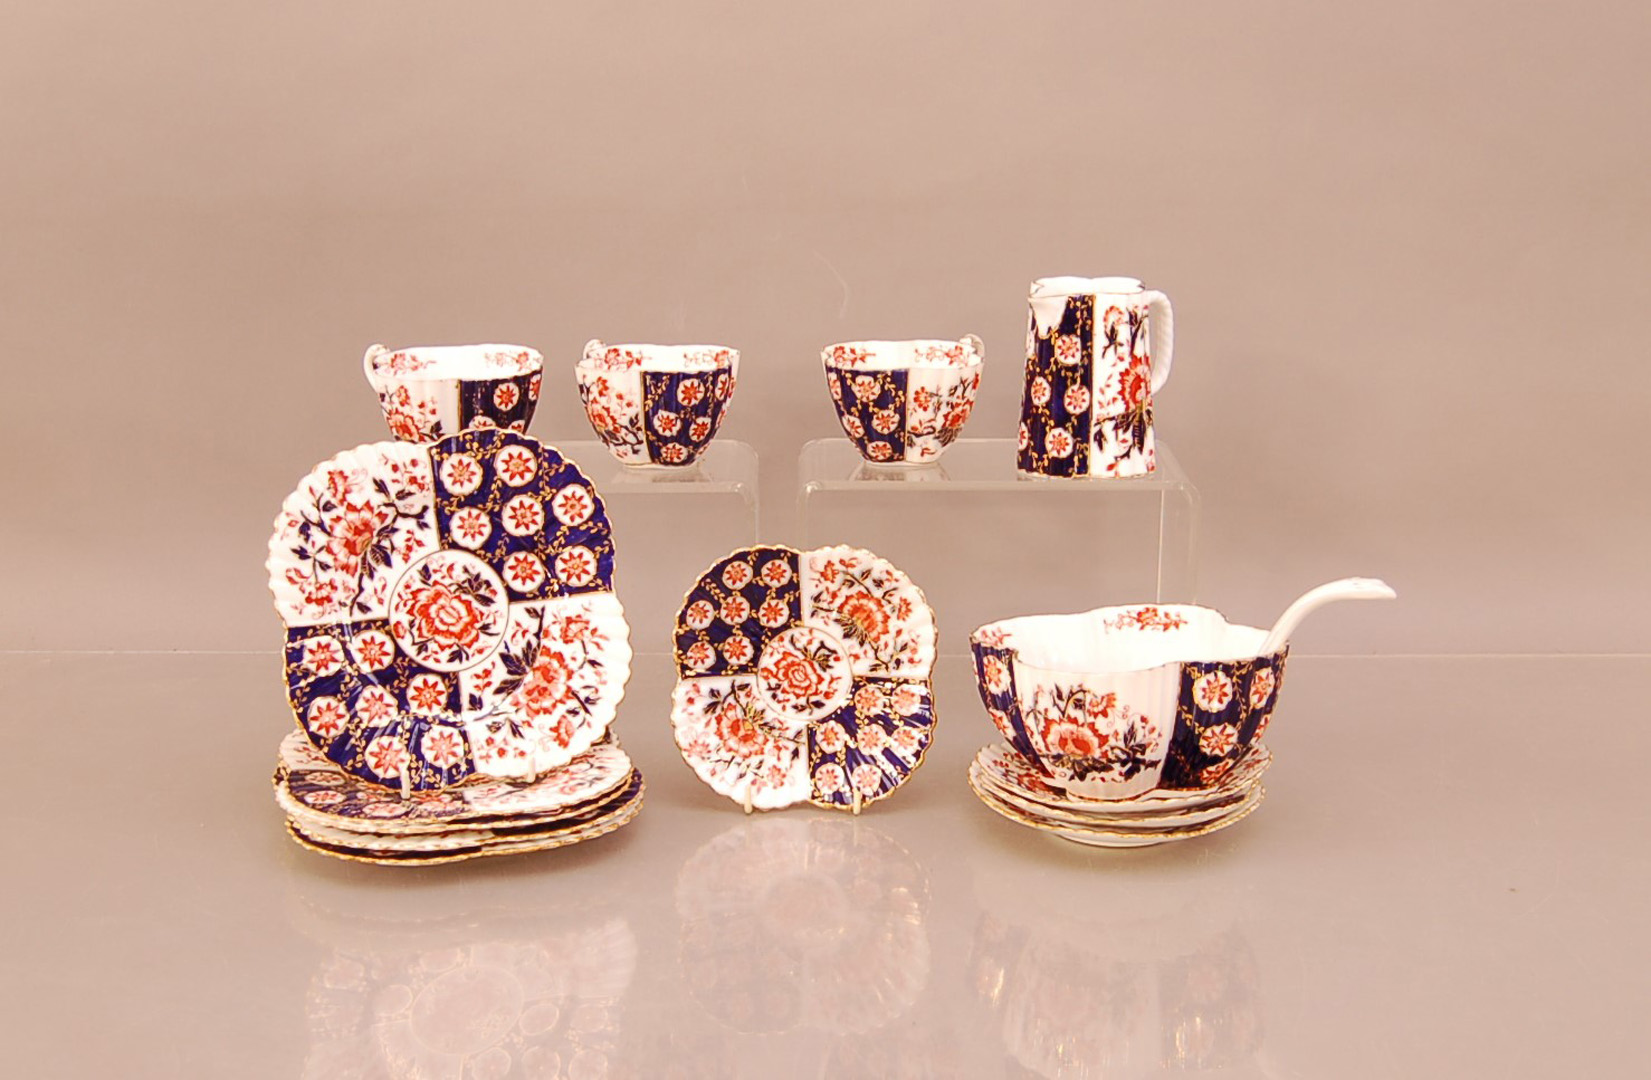 A selection of Royal Crown Derby 'Imari' pattern porcelain, comprising five side plates, four